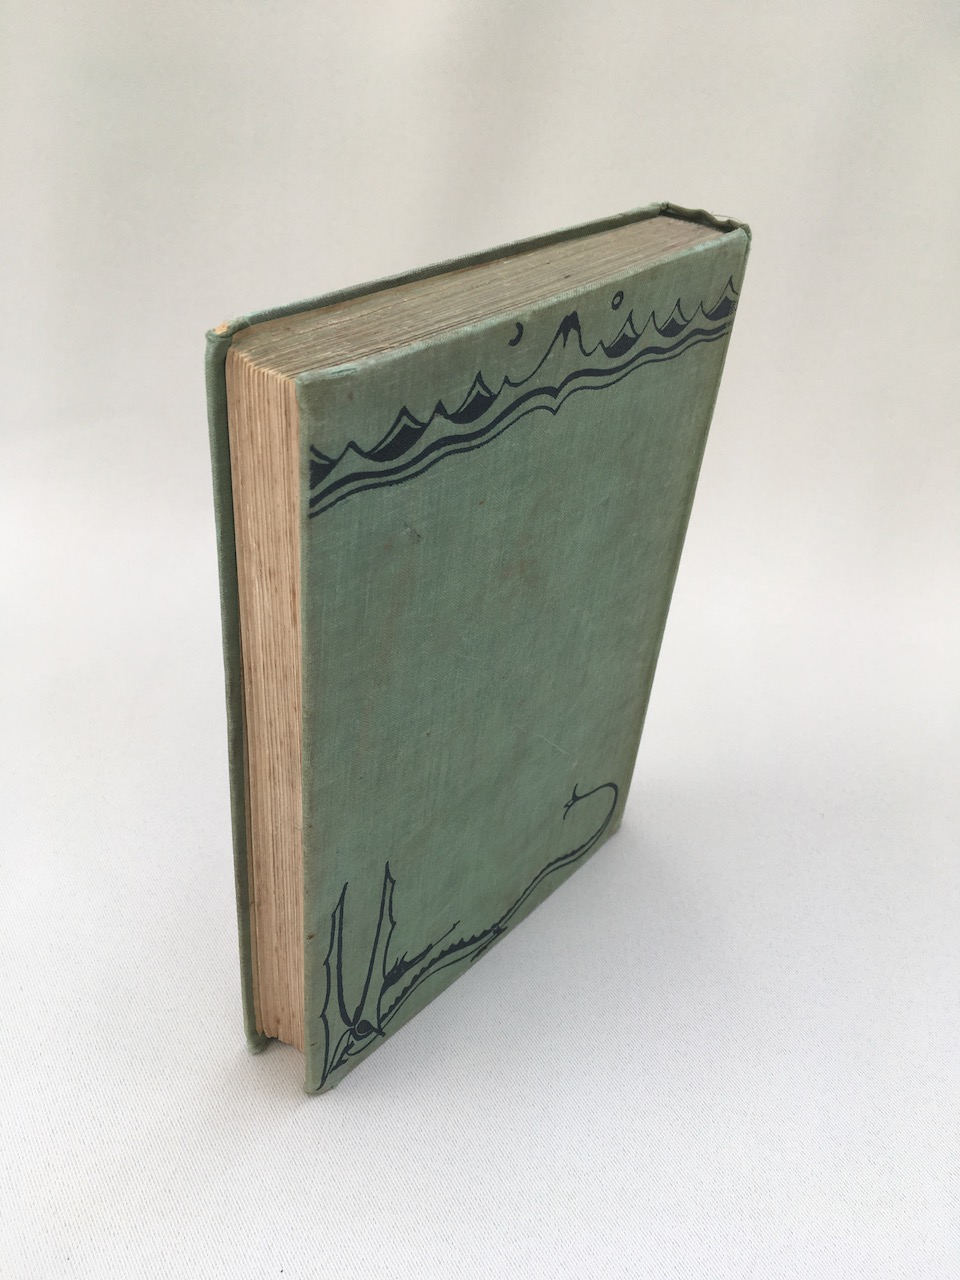 
The Hobbit, George Allen & Unwin, 1937 1st UK Edition 2nd impression 4